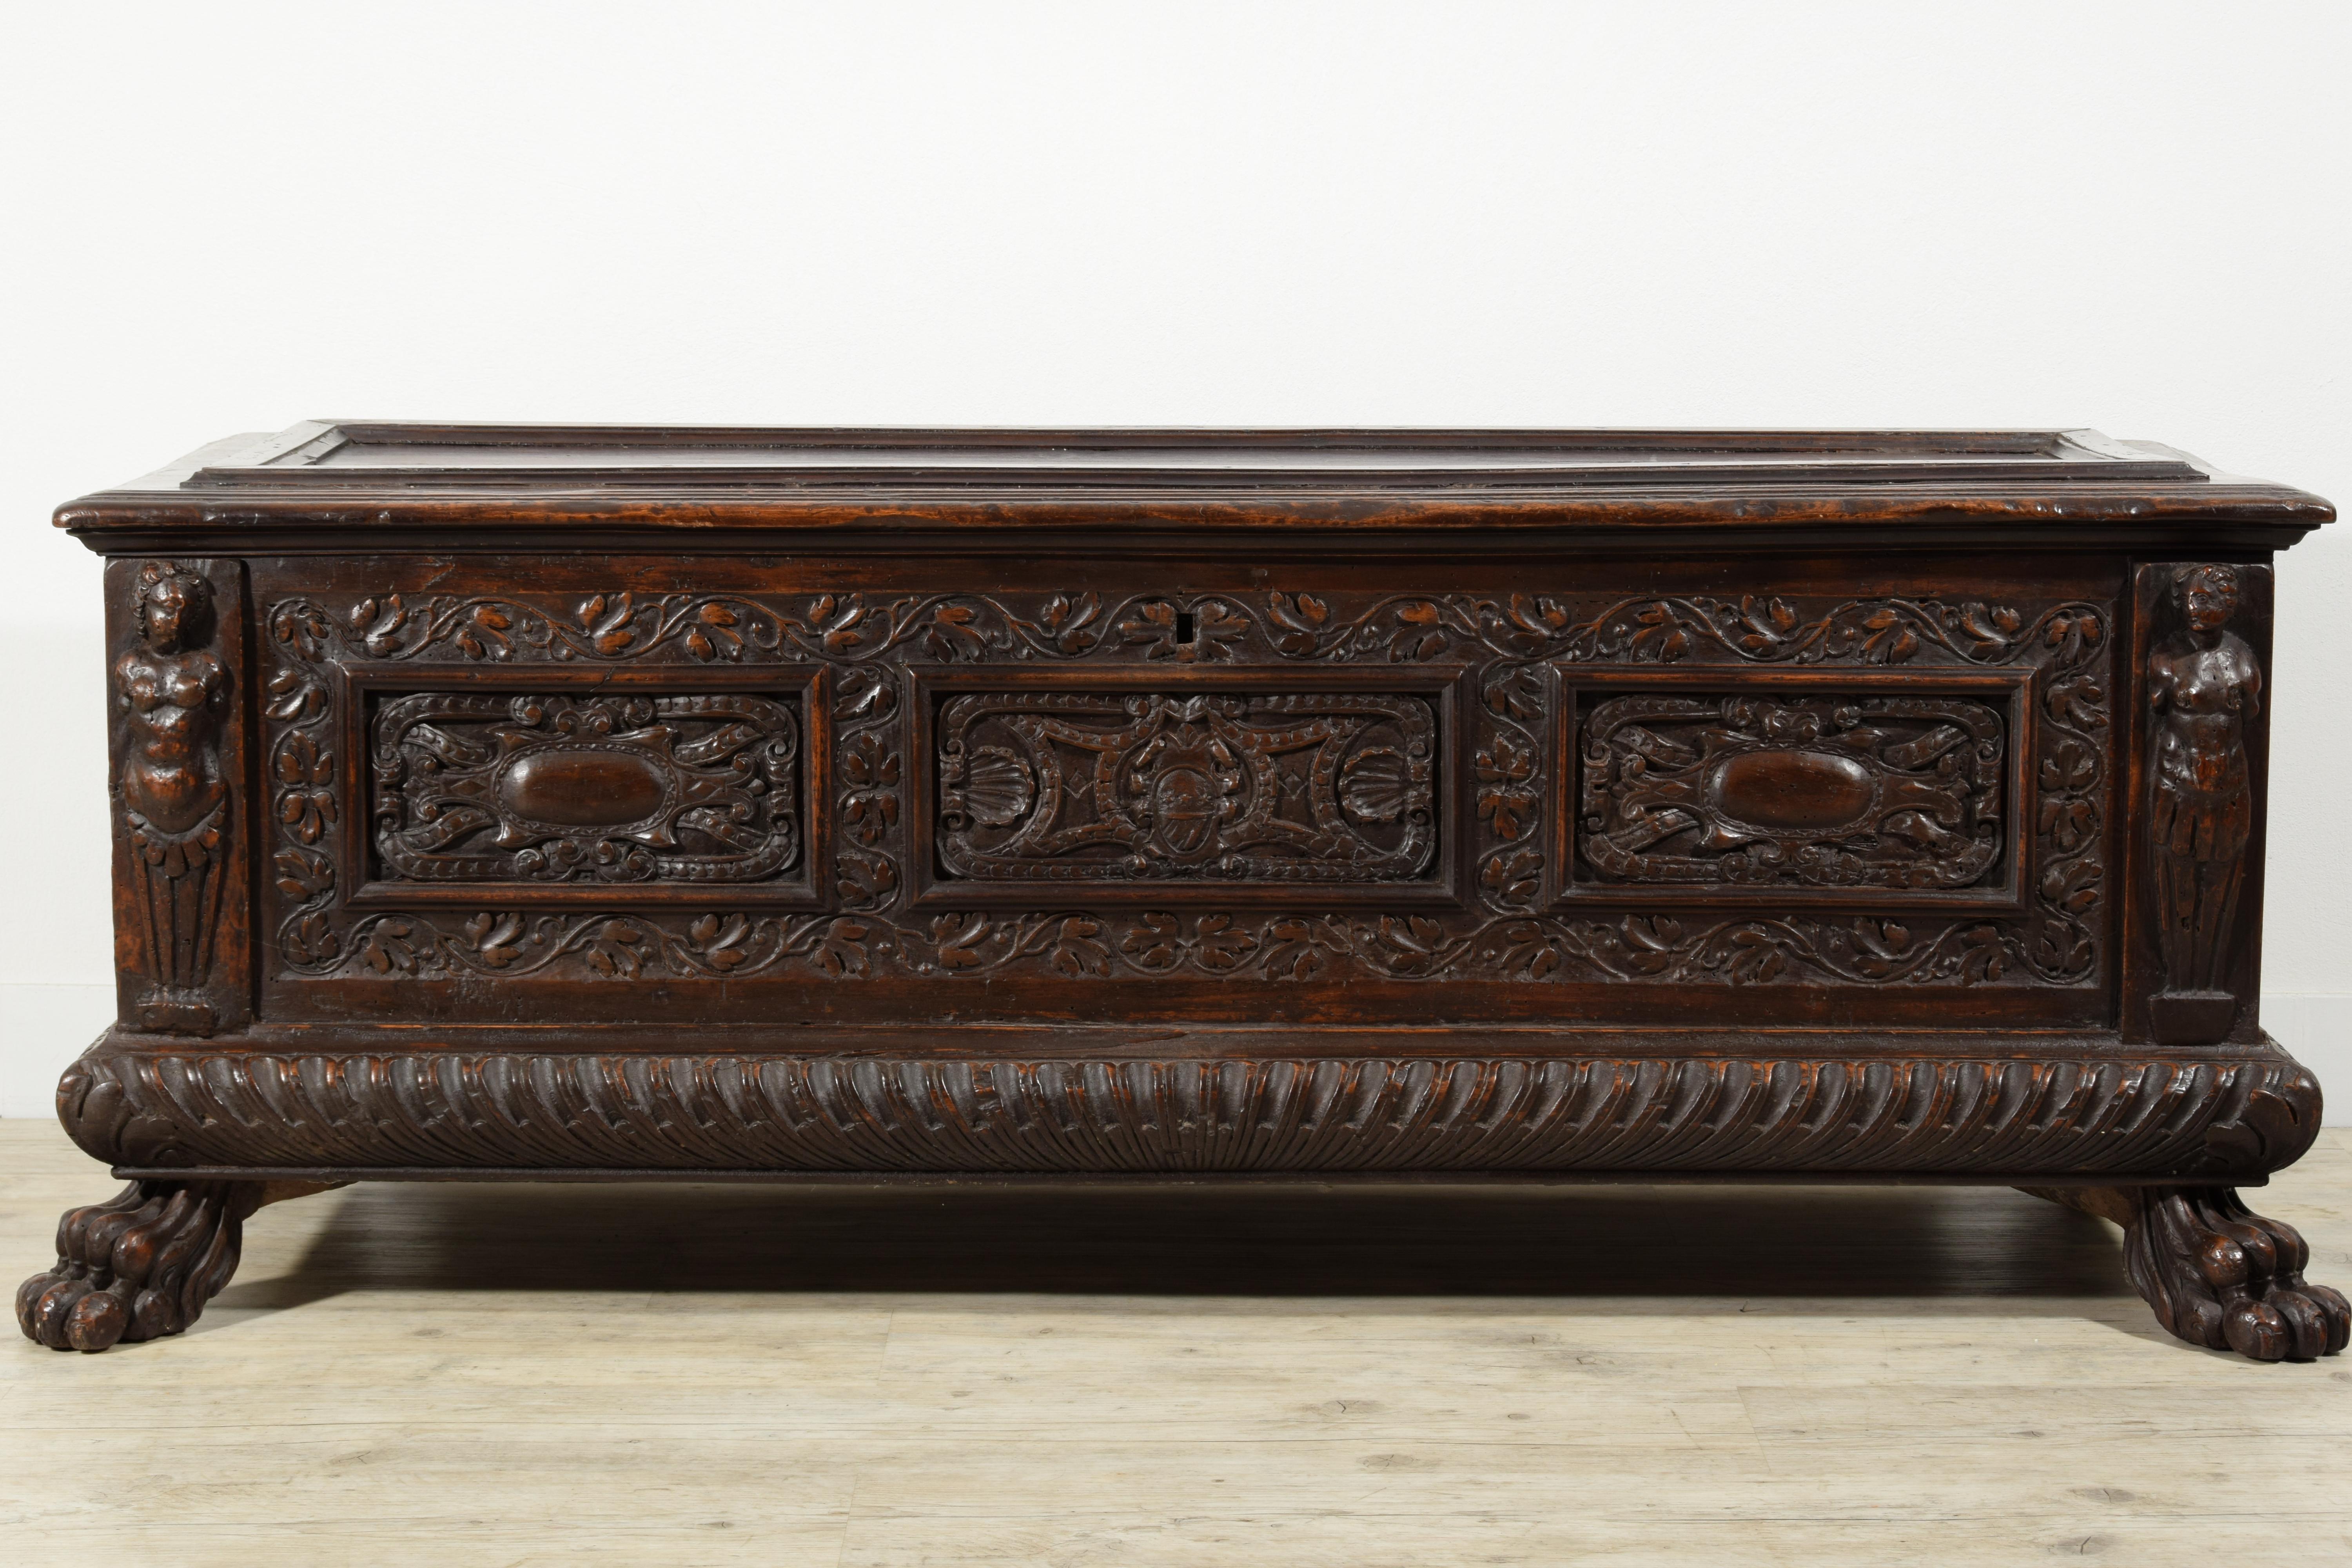 18th Century and Earlier XVI Century, Italian Renaissance Wood Chest For Sale